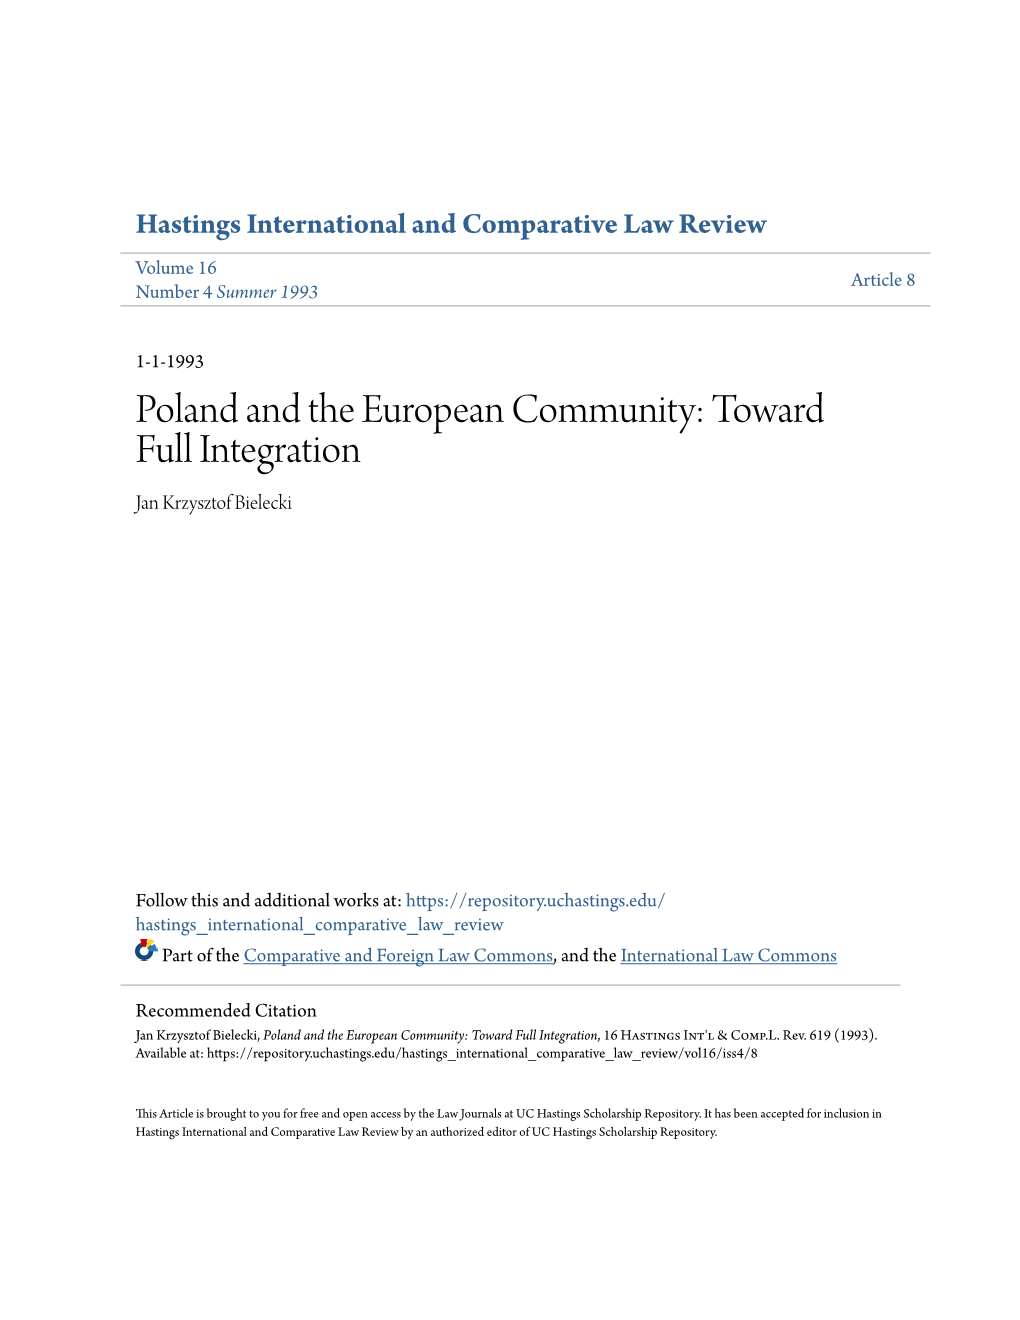 Poland and the European Community: Toward Full Integration Jan Krzysztof Bielecki